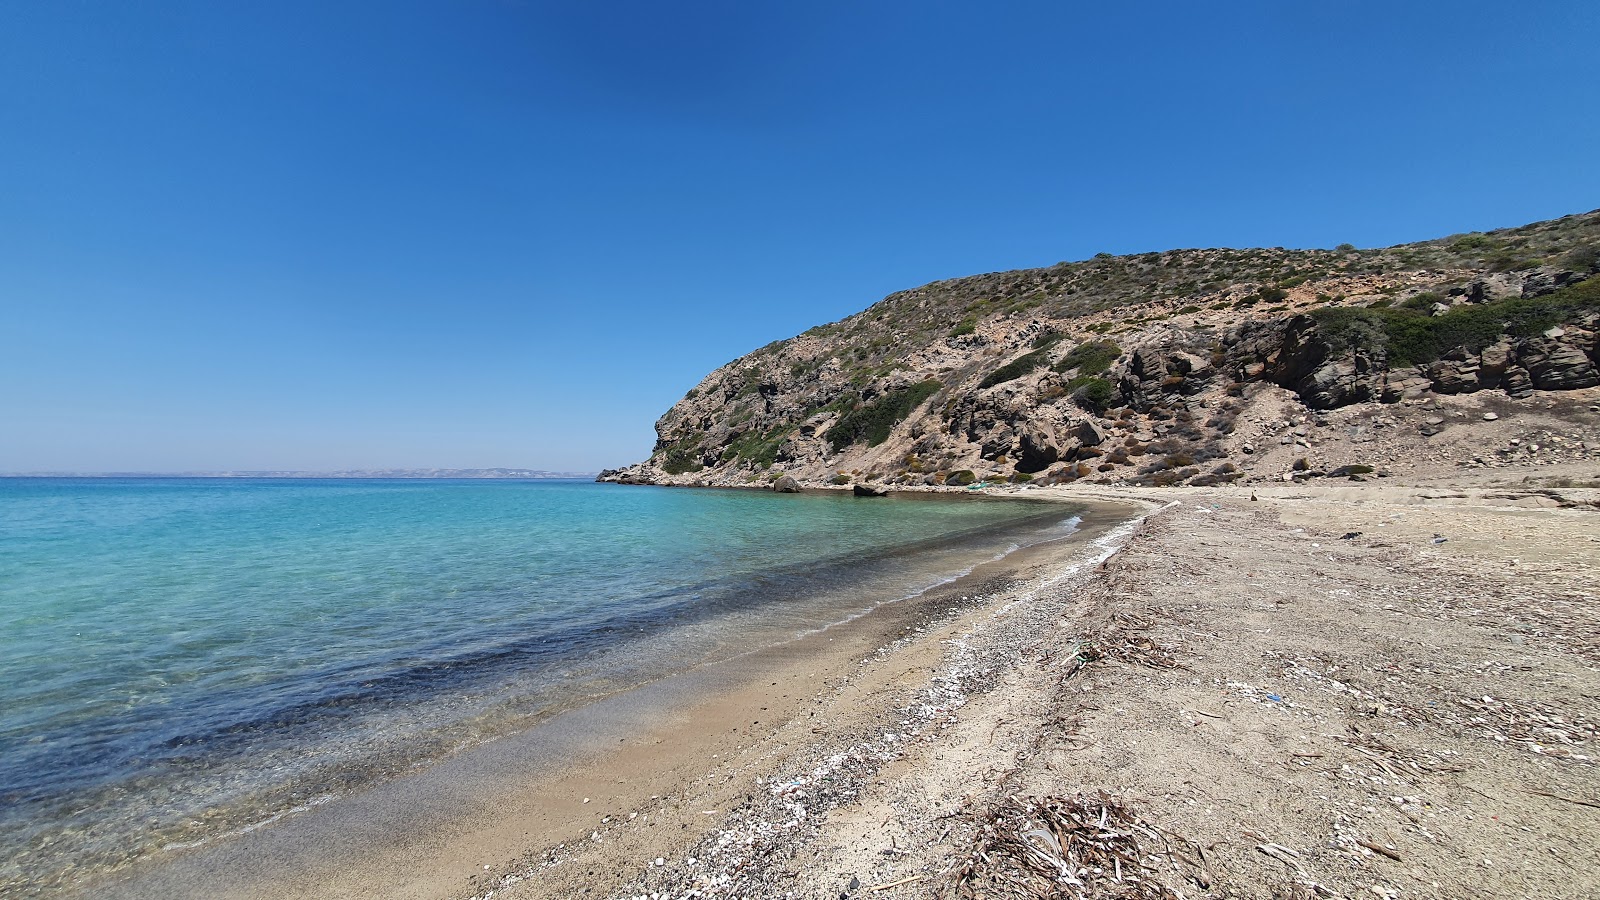 Gyali dodekanisou III'in fotoğrafı geniş plaj ile birlikte